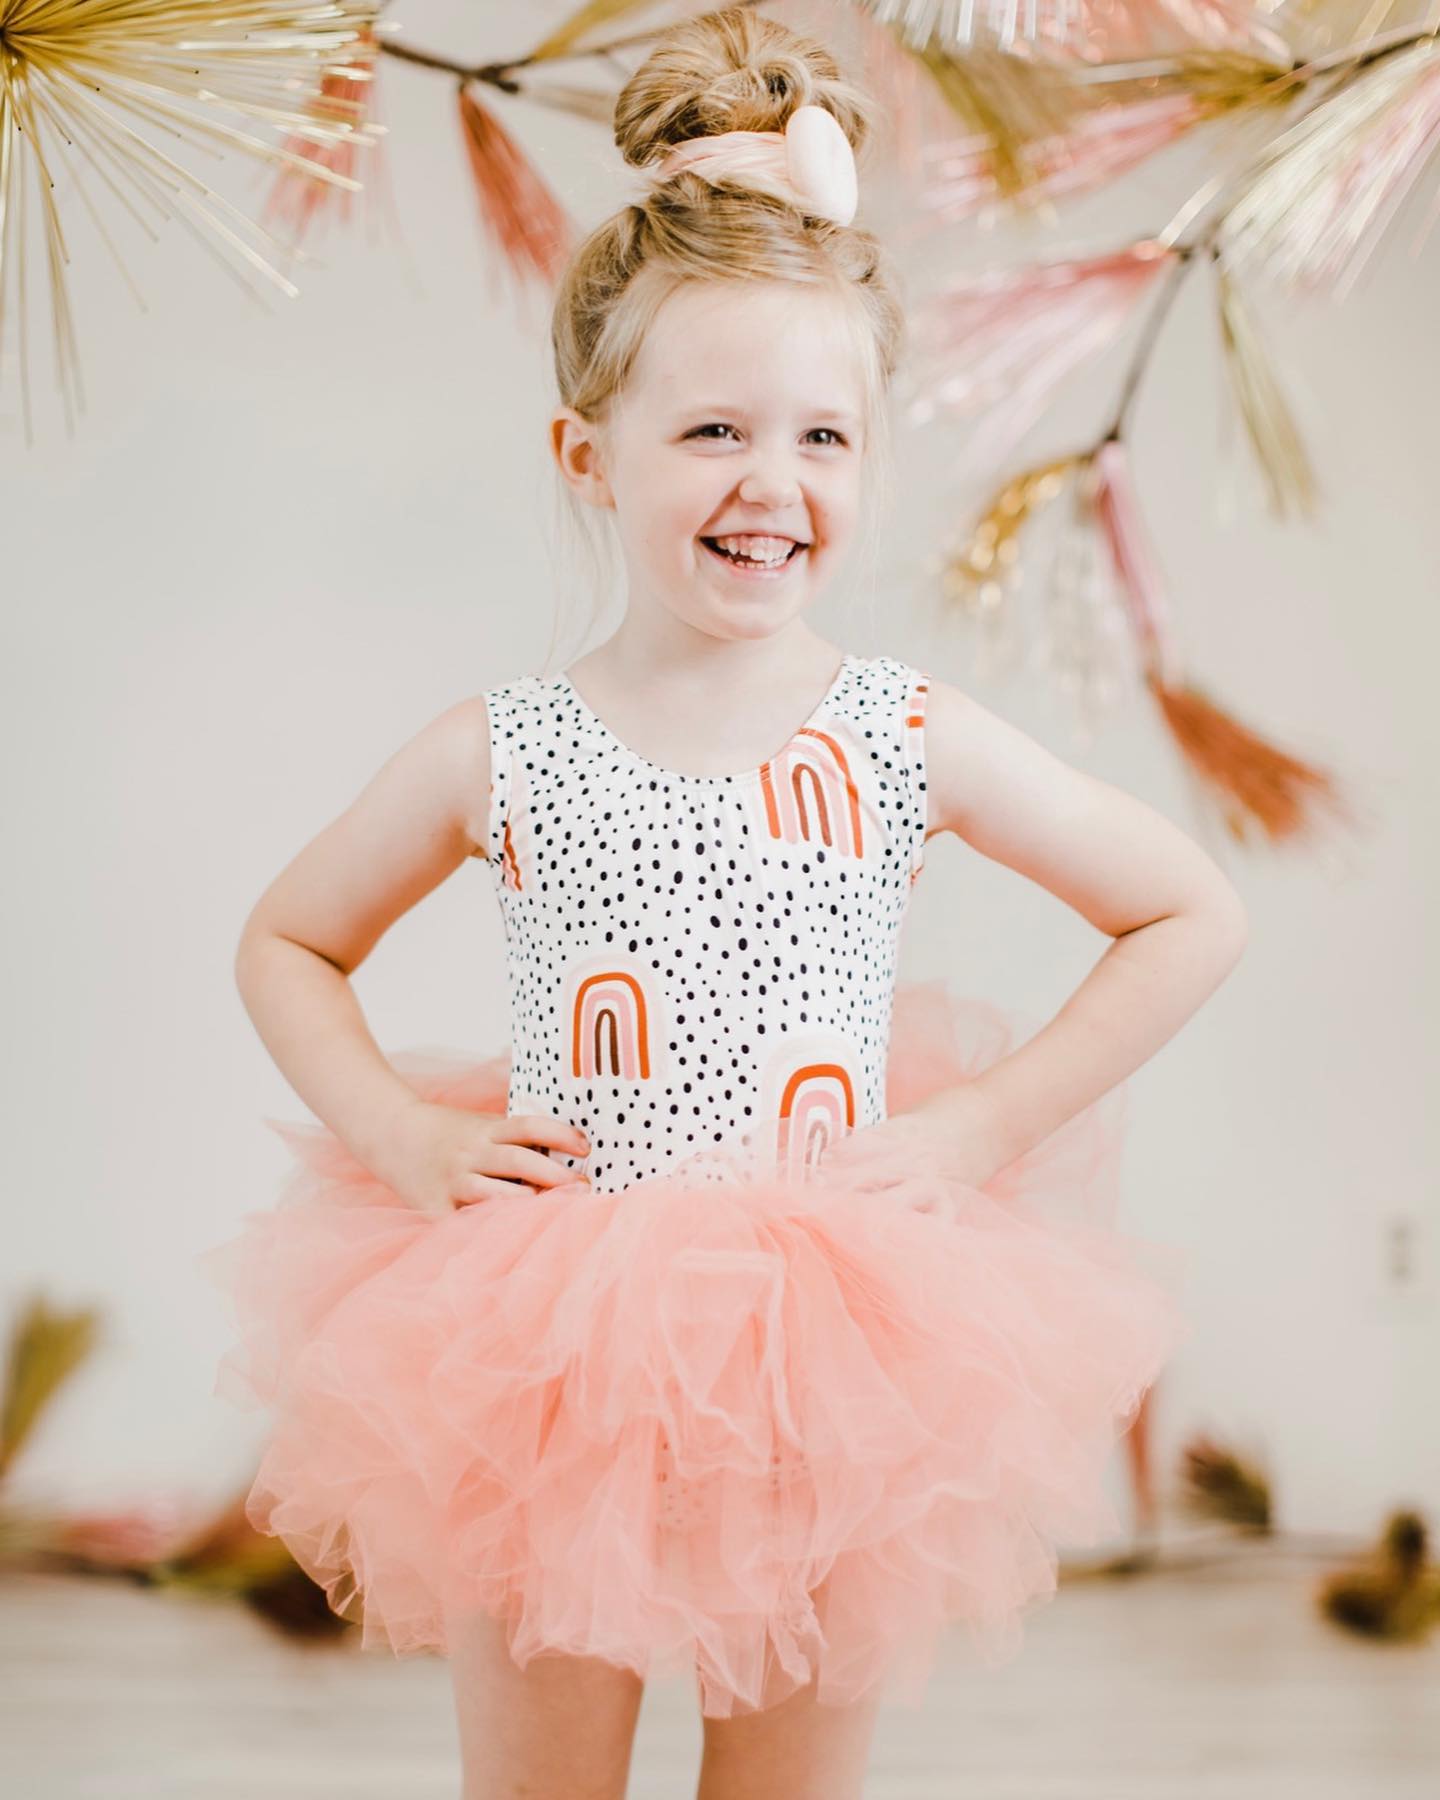 VIDEO - Mila Ballerina! Gorgeous Tutu Dresses for Little Girls by Mila and Rose